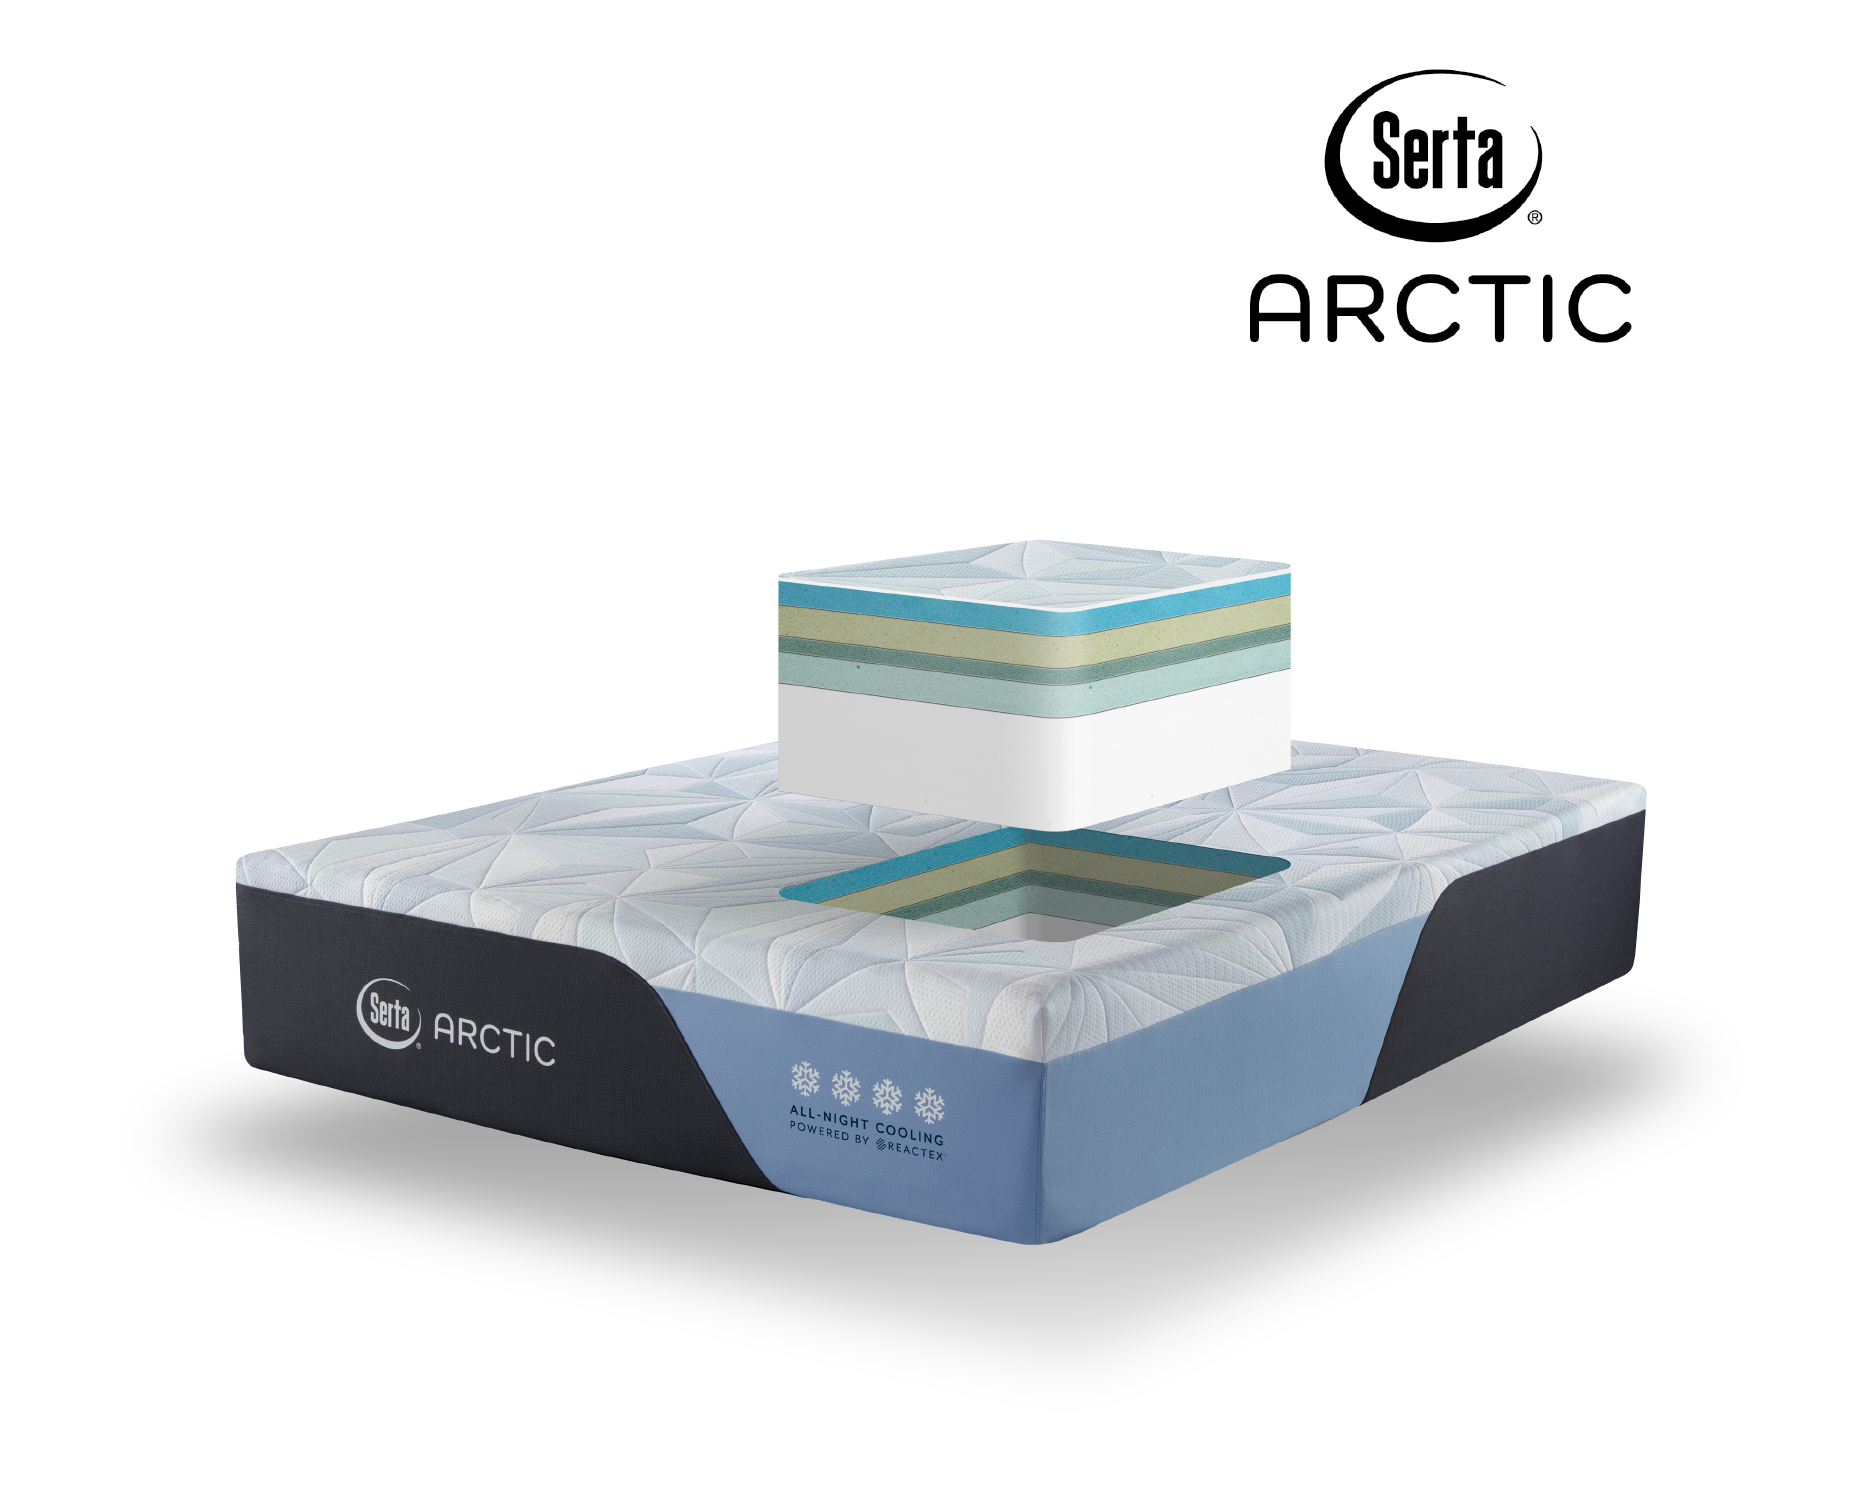 Serta Arctic 13.5" Plush Mattress